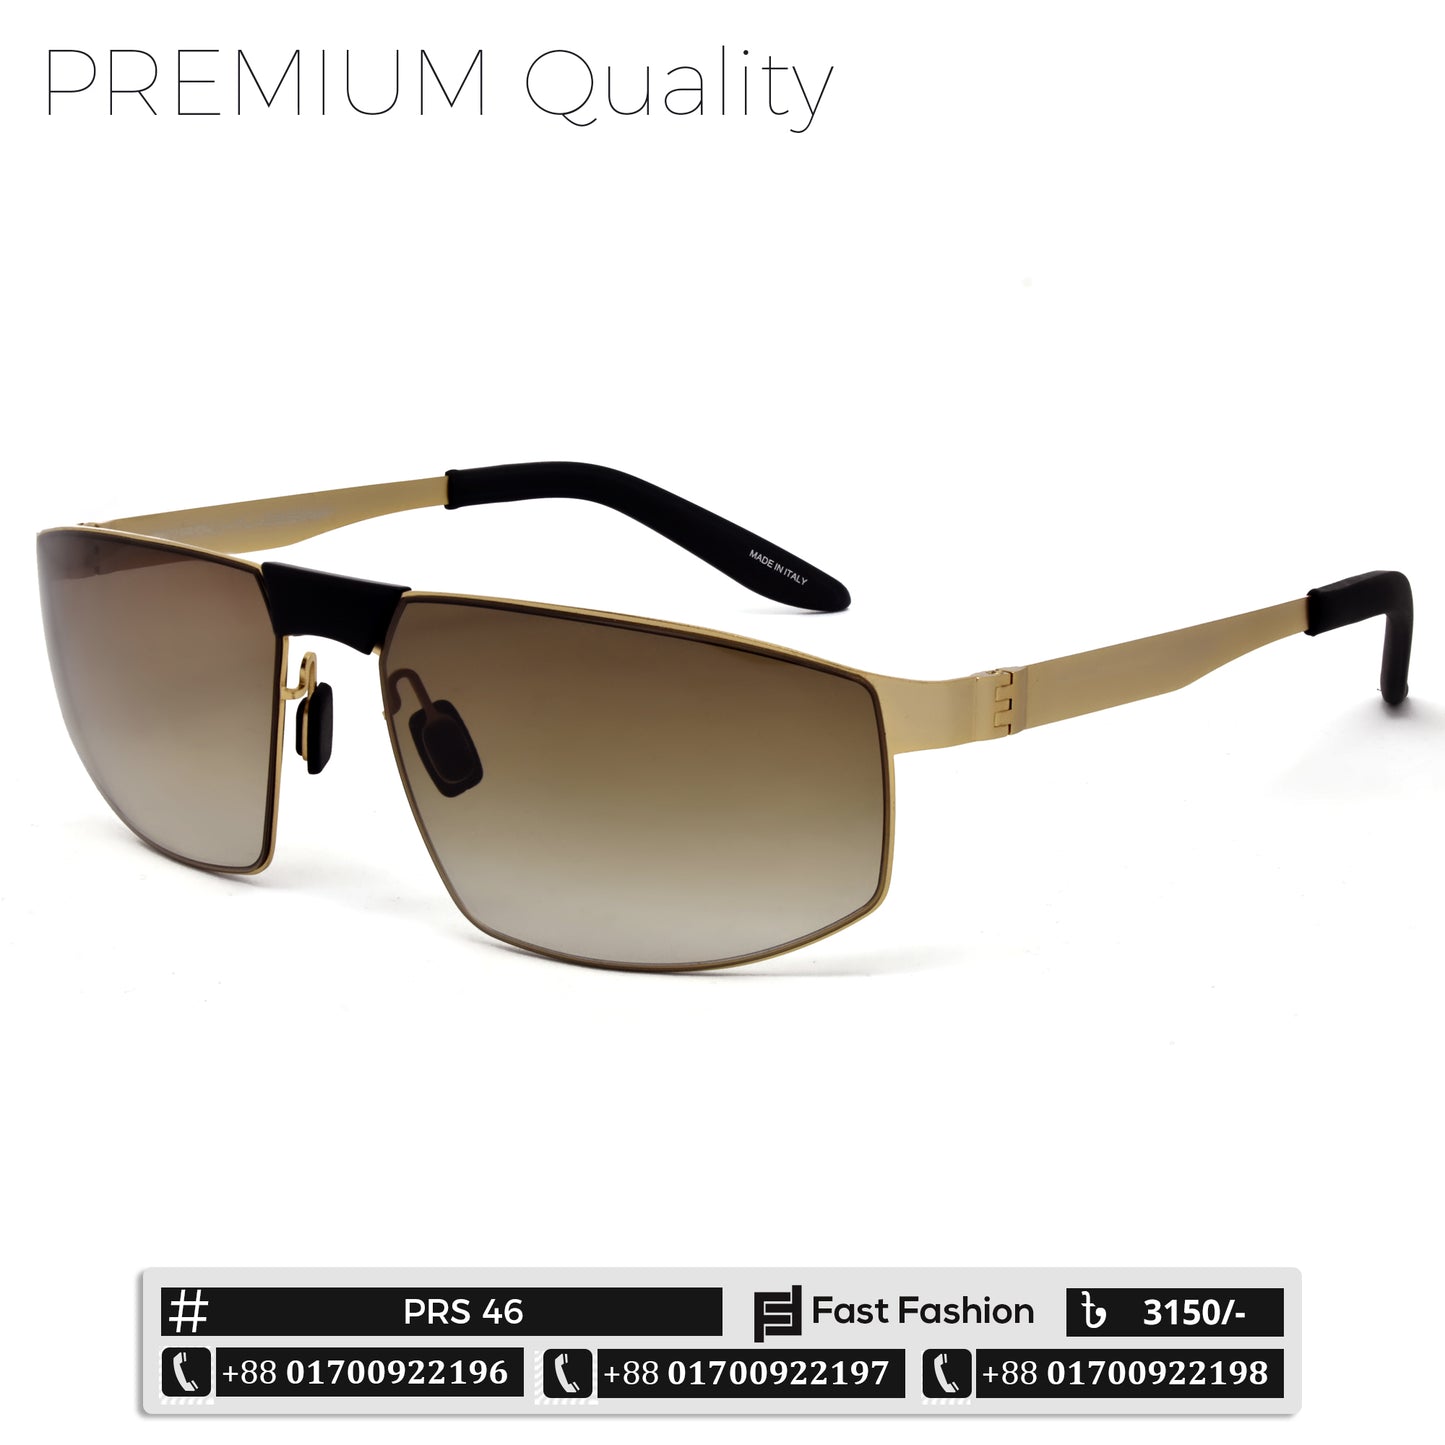 Royal Premium Quality Poly Carbon Sunglass for Men | PRS 46